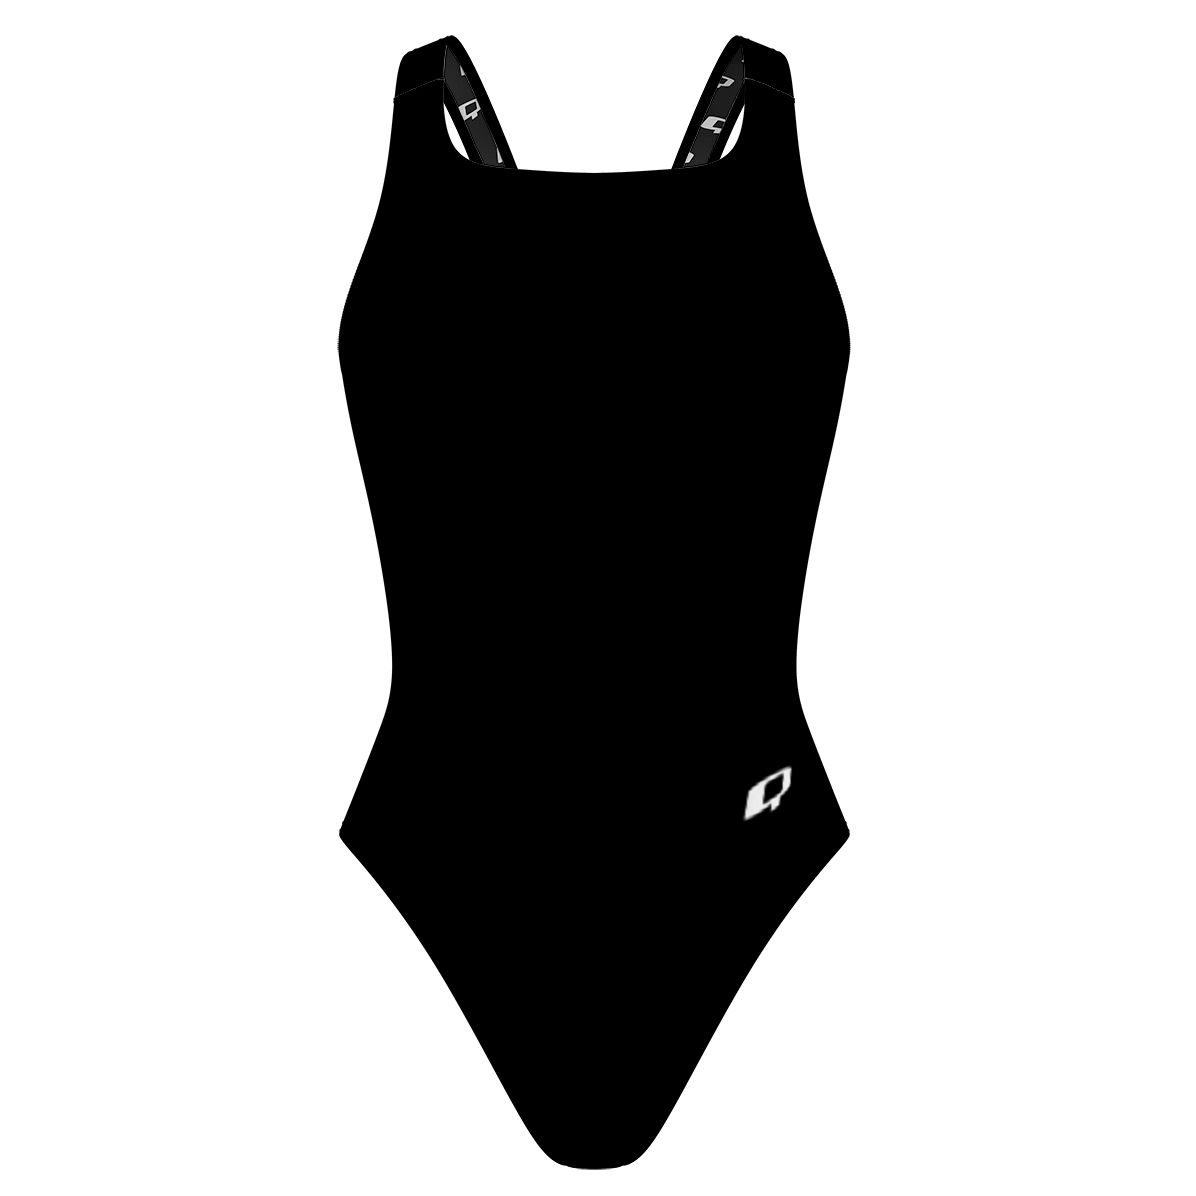 Test - Classic Strap Swimsuit